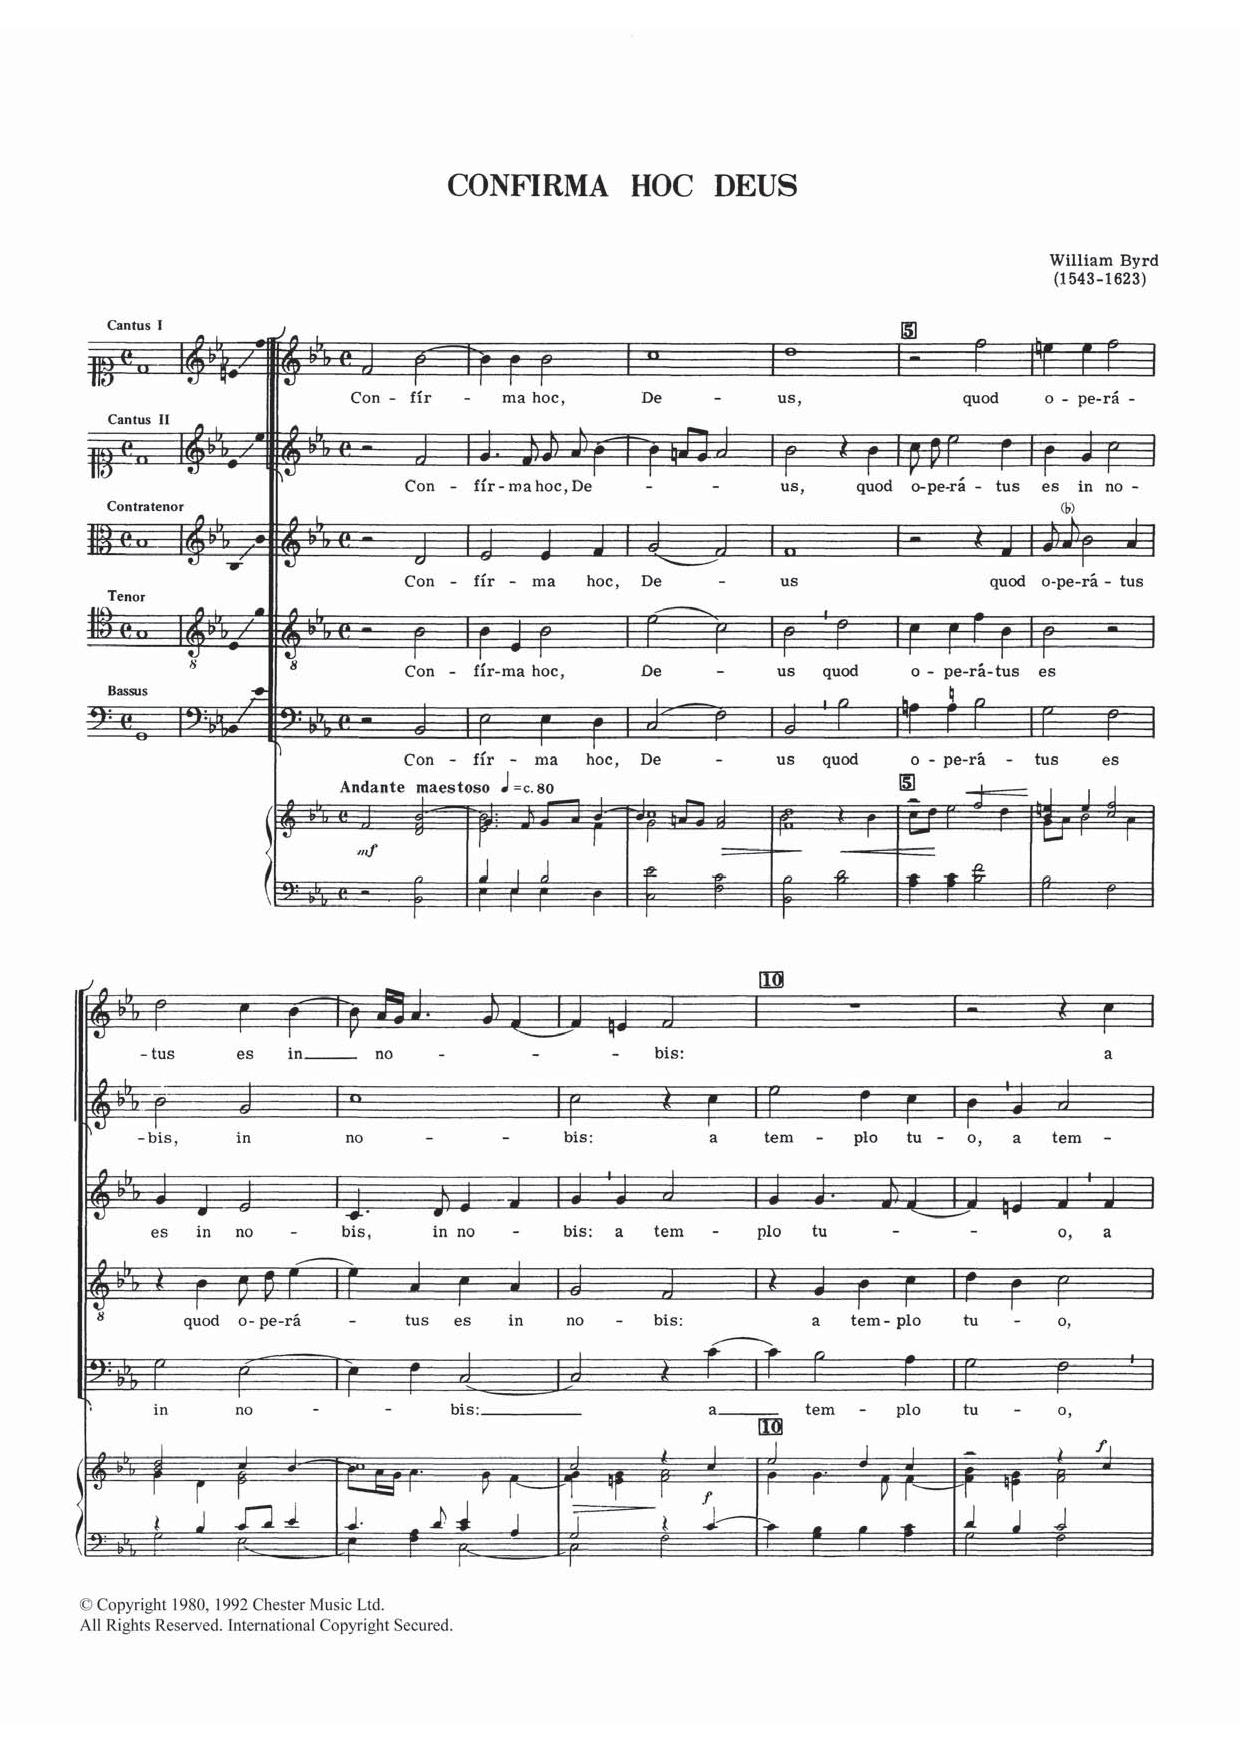 William Byrd Confirma Hoc Deus Sheet Music Notes & Chords for Choral SAATB - Download or Print PDF